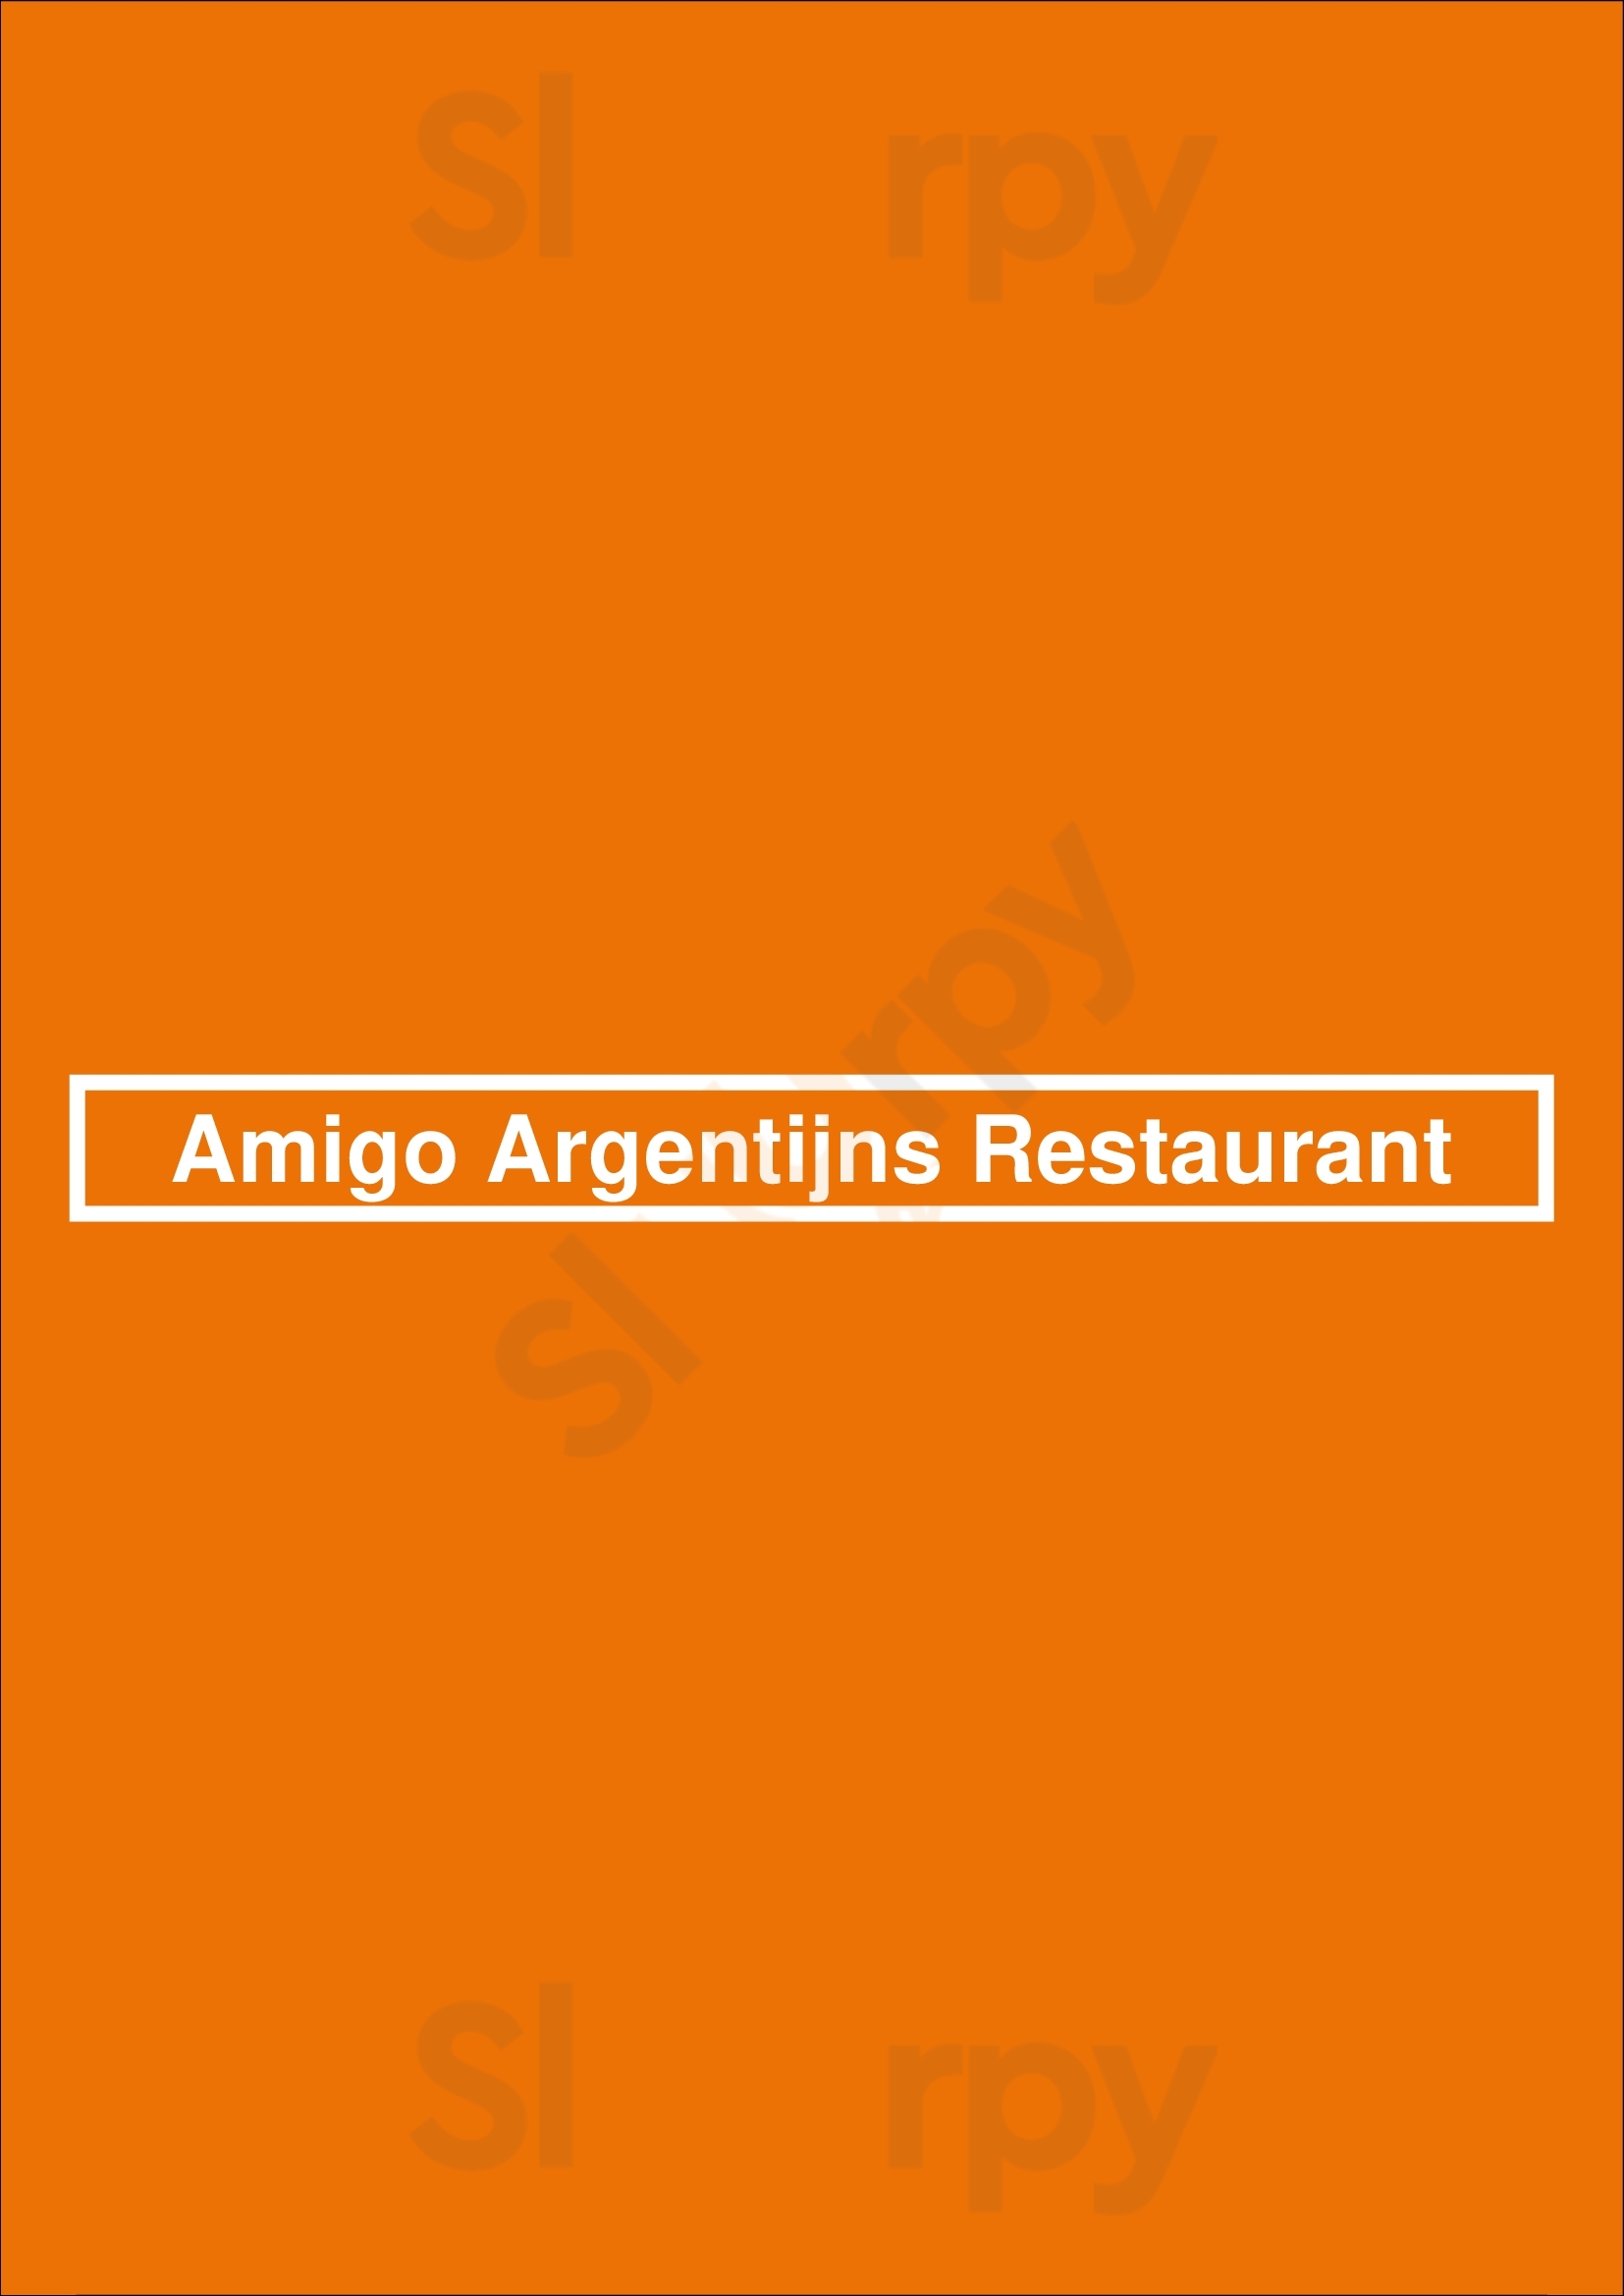 Amigo Argentijns Restaurant Amsterdam Menu - 1